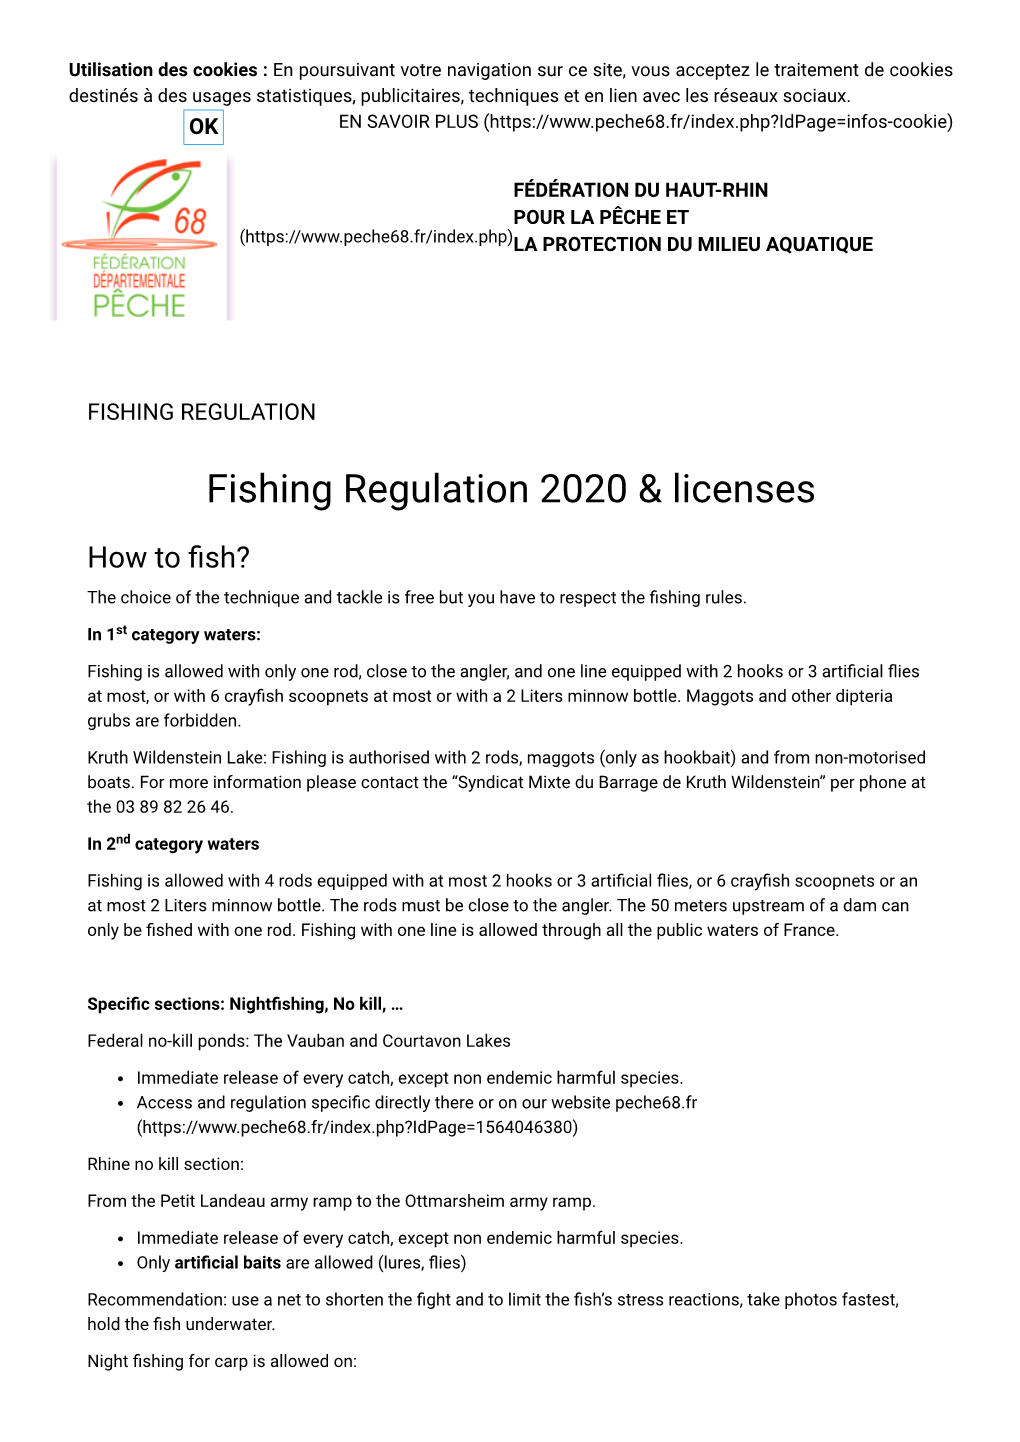 Fishing Regulation 2020 & Licenses